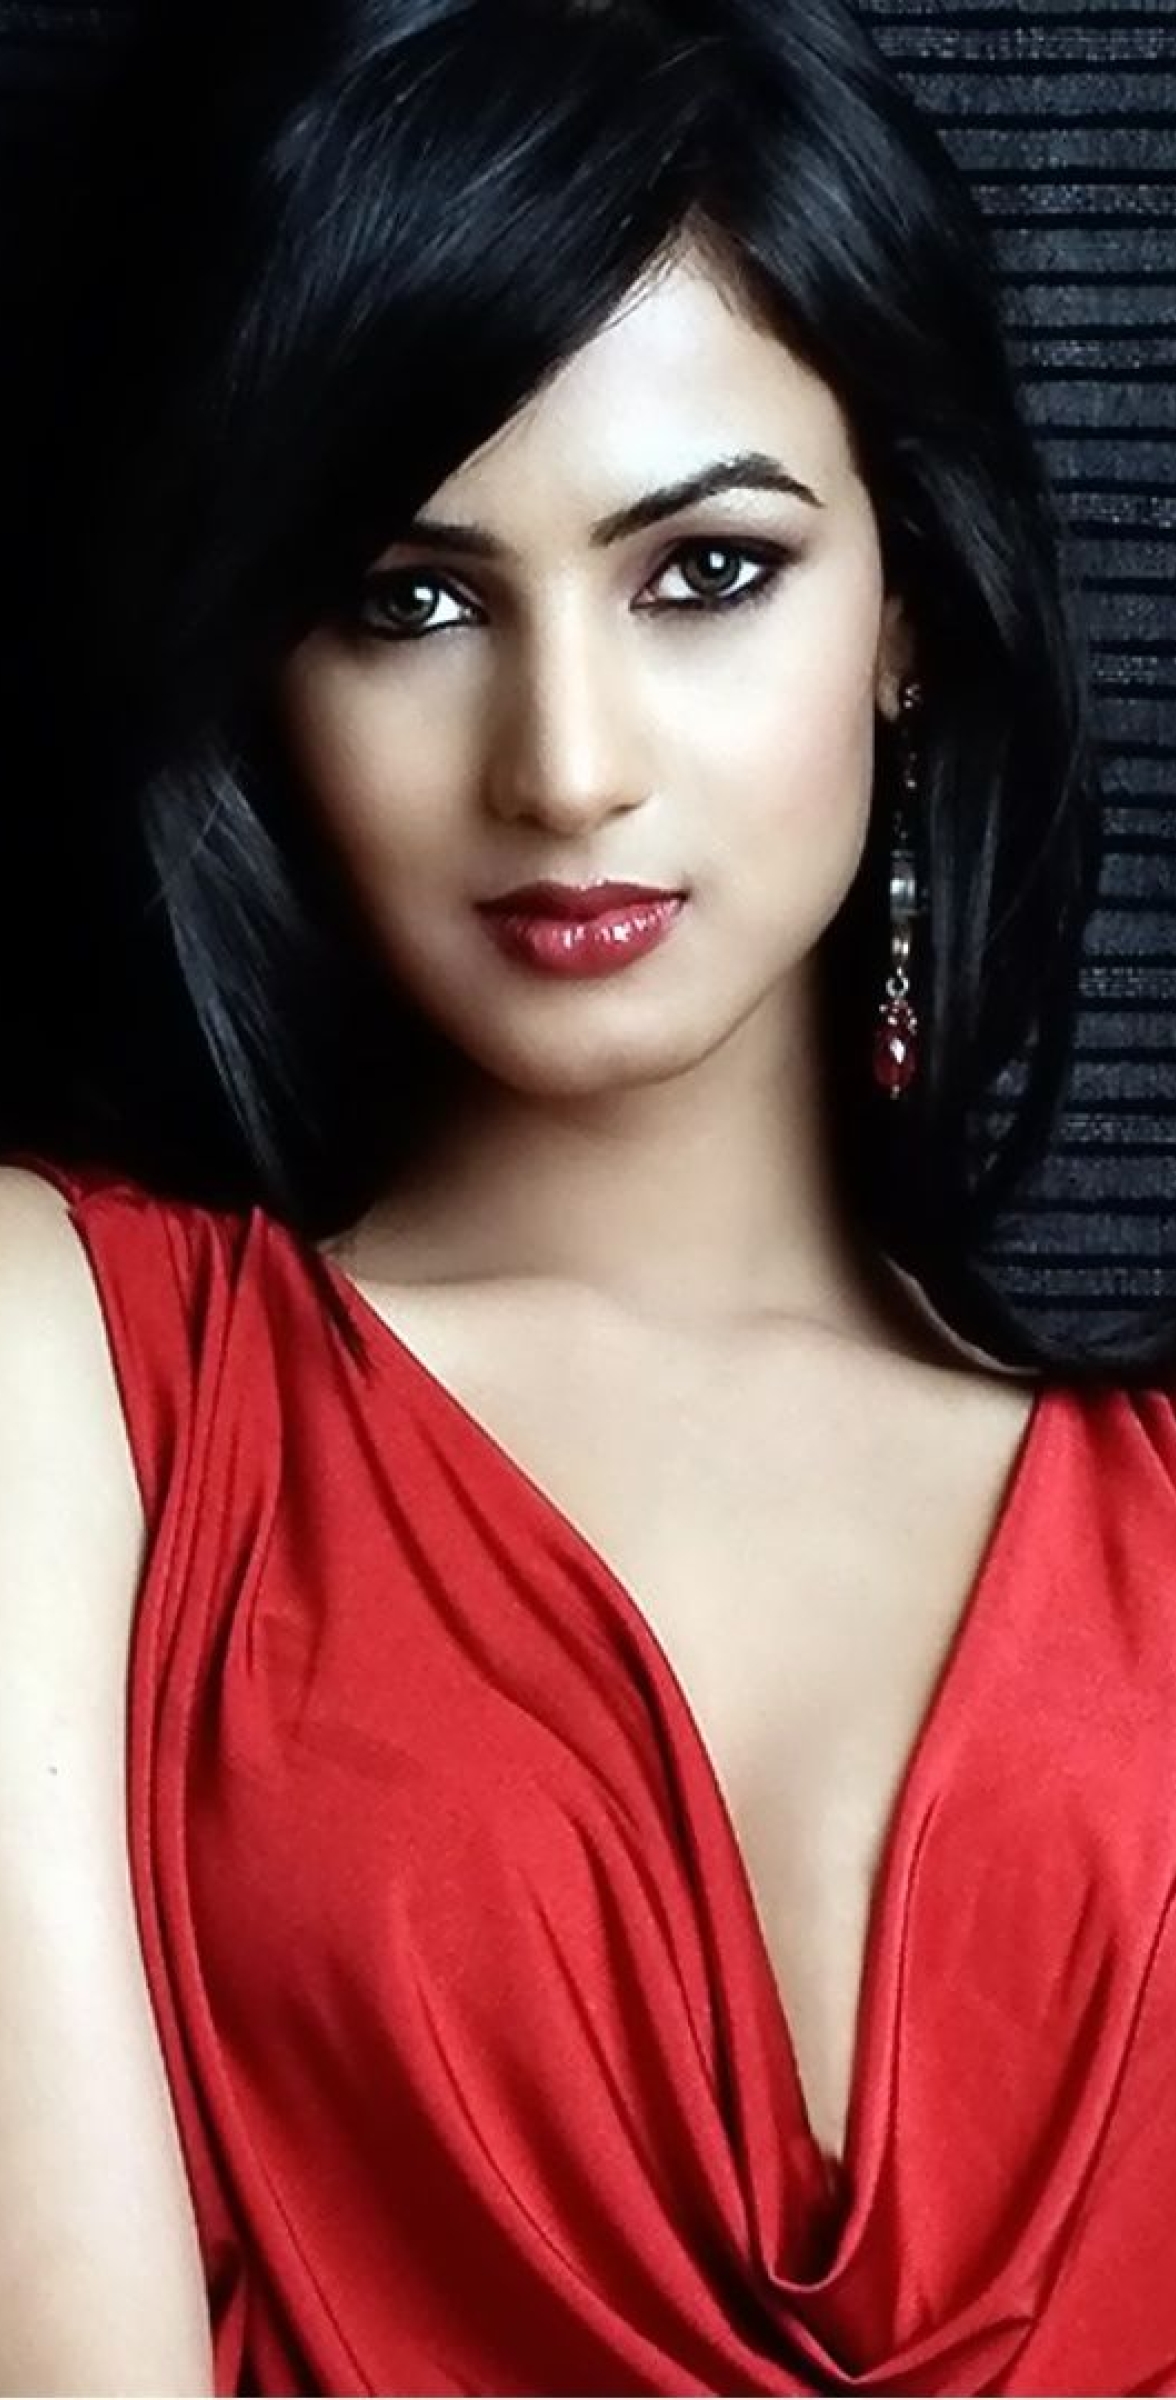 1176x2400 Sonal Chauhan In Red Dress 1176x2400 Resolution Wallpaper Hd Indian Celebrities 4k 